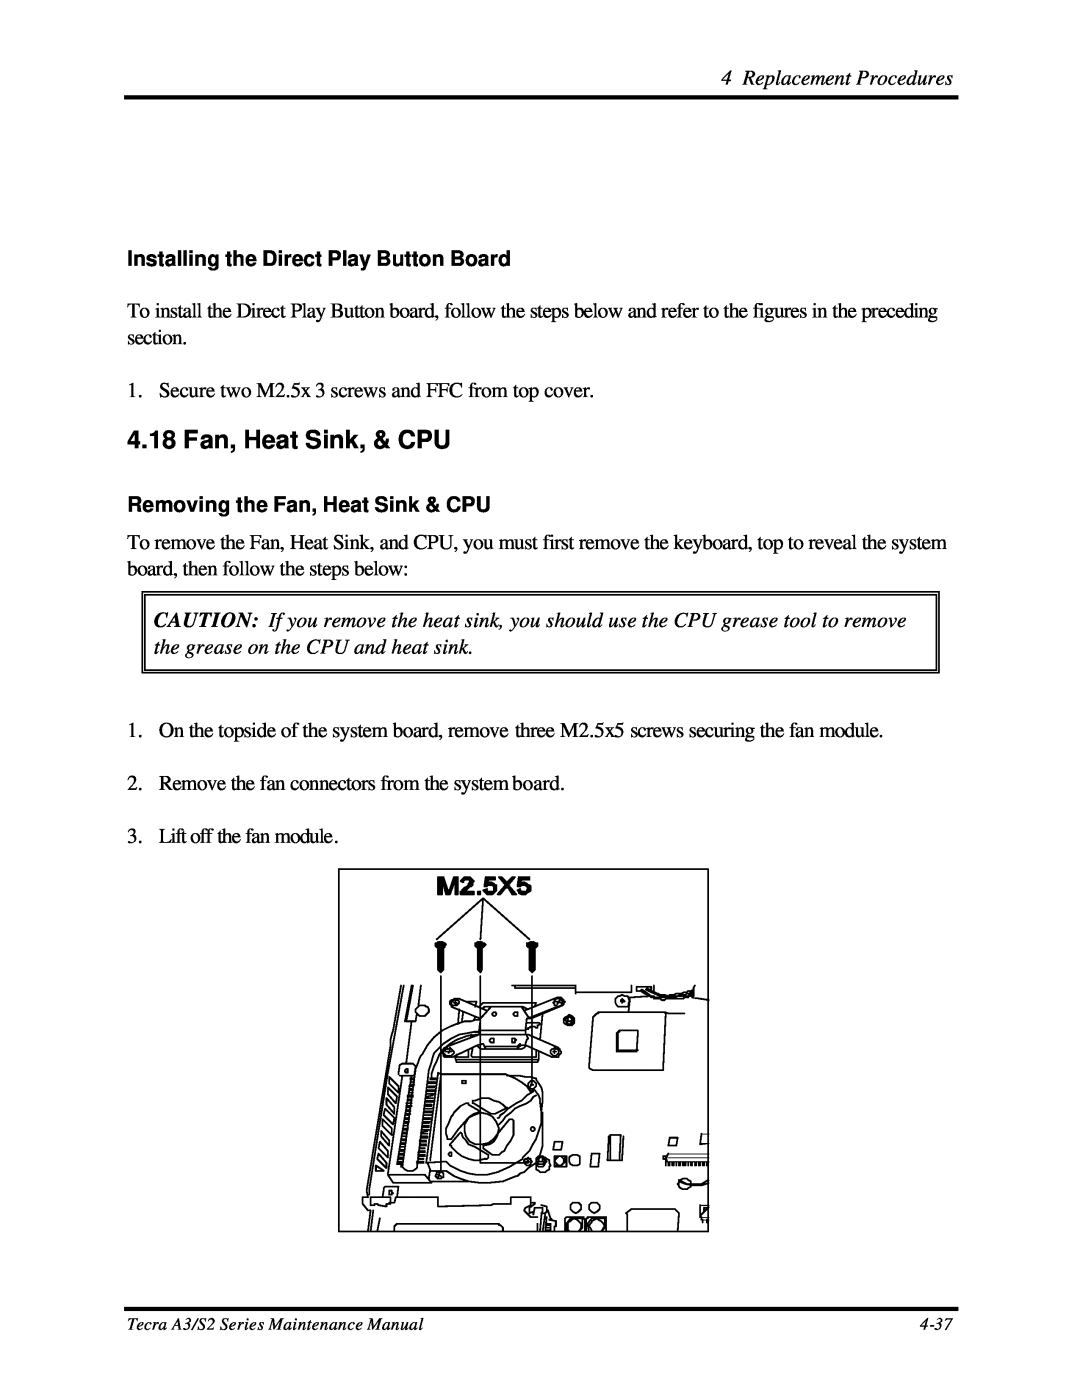 Toshiba S2 manual 4.18 Fan, Heat Sink, & CPU, Installing the Direct Play Button Board, Removing the Fan, Heat Sink & CPU 